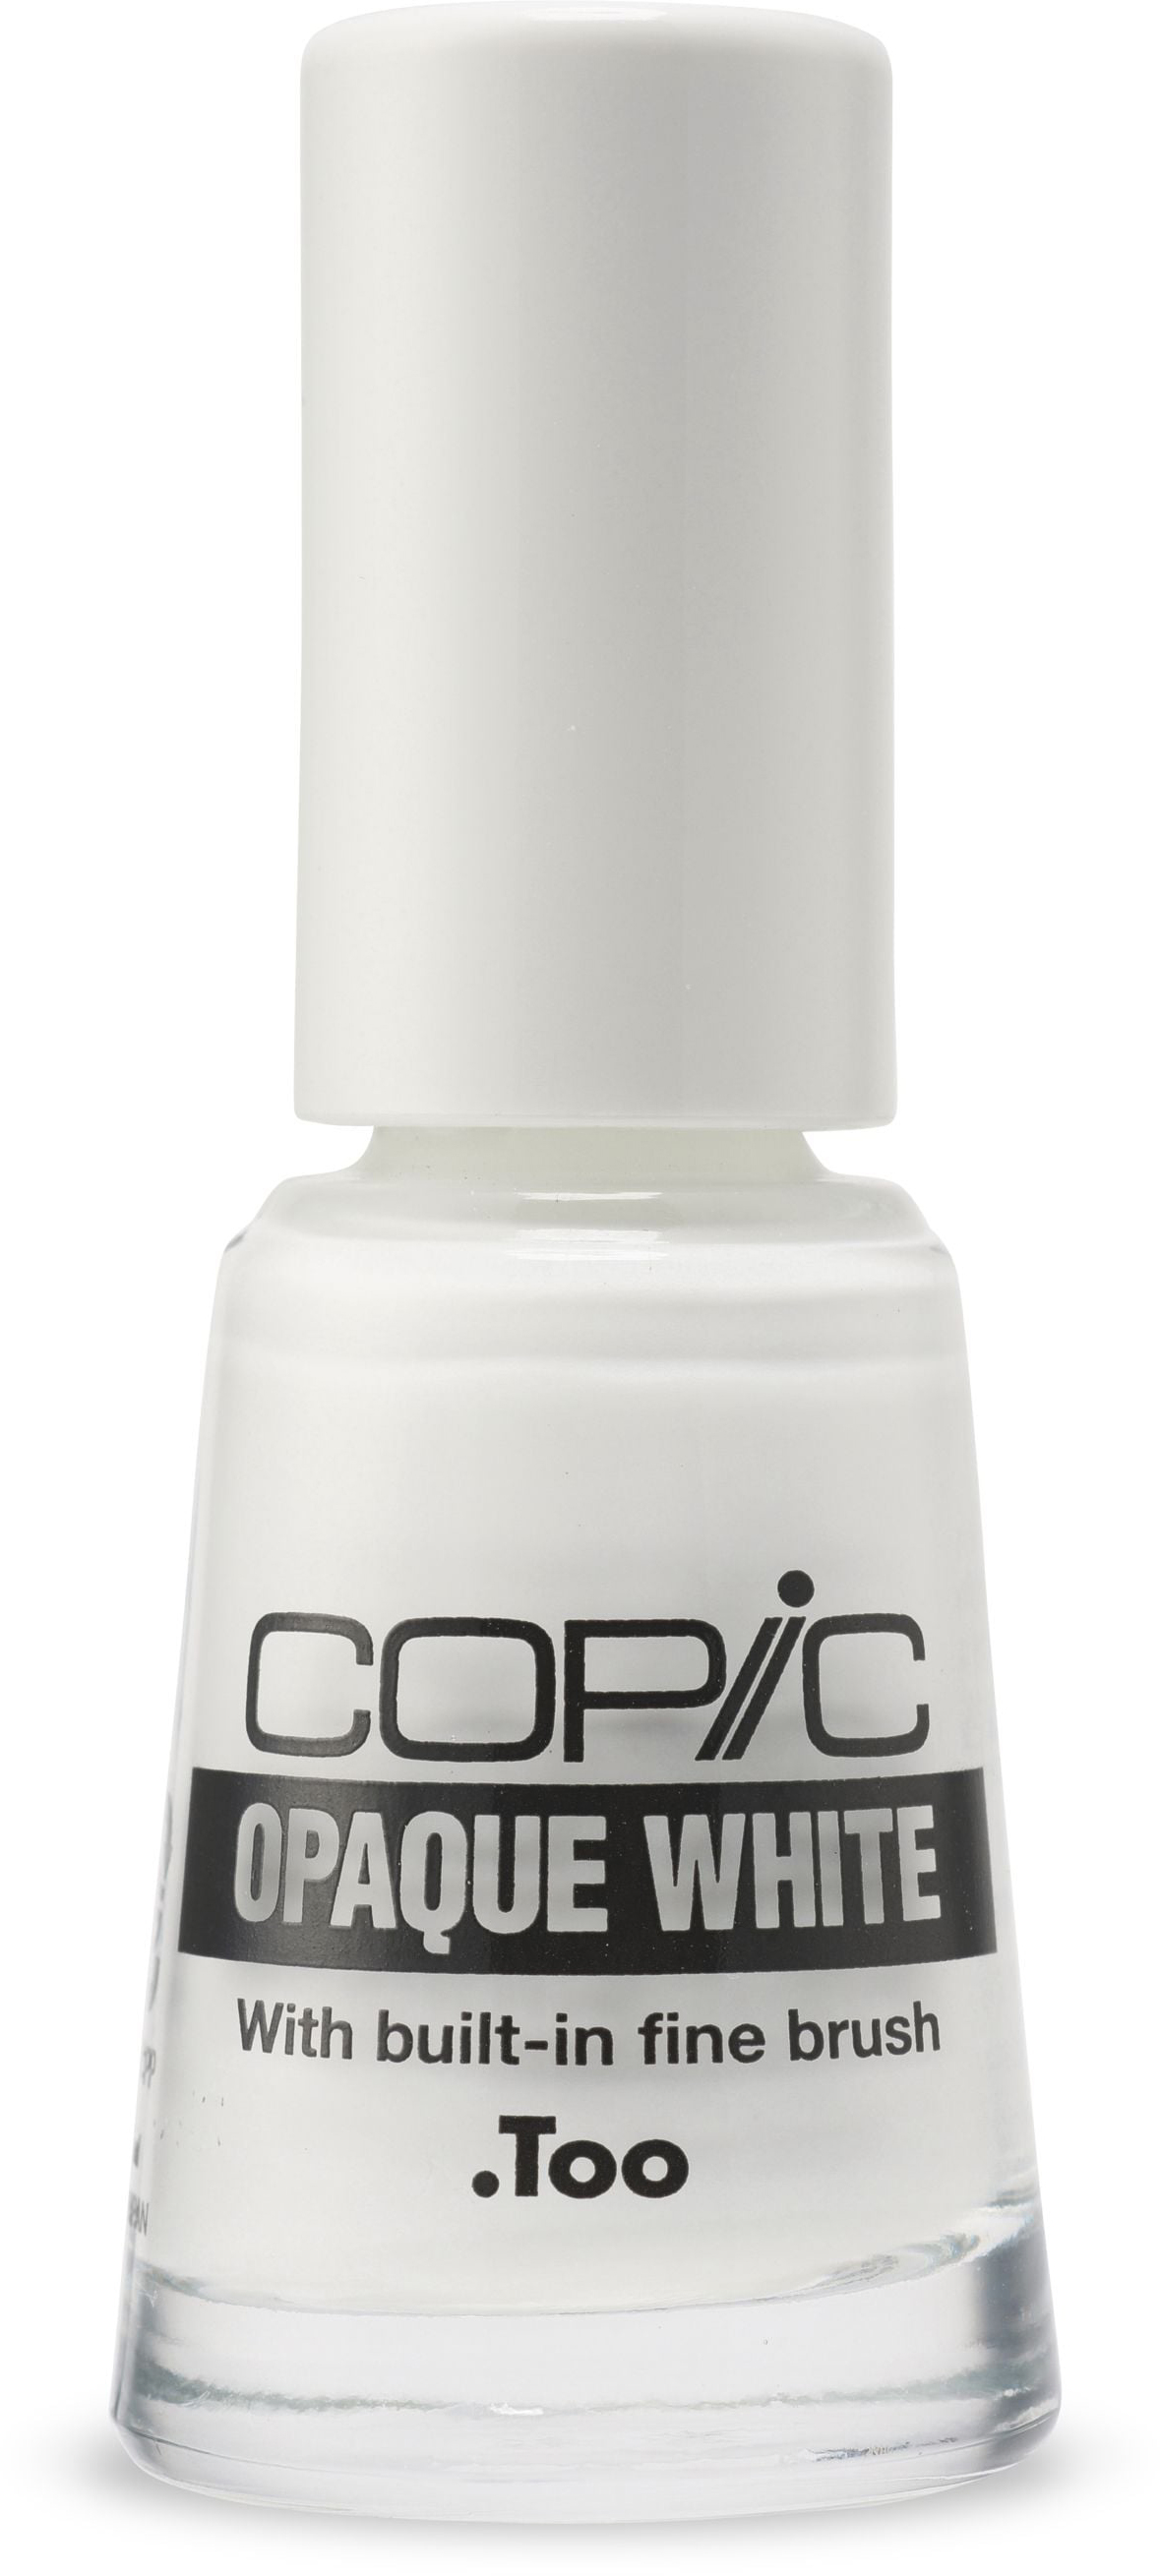 COPIC Opaque White Flacon 20076506 mit Pinsel, 6ml mit Pinsel, 6ml